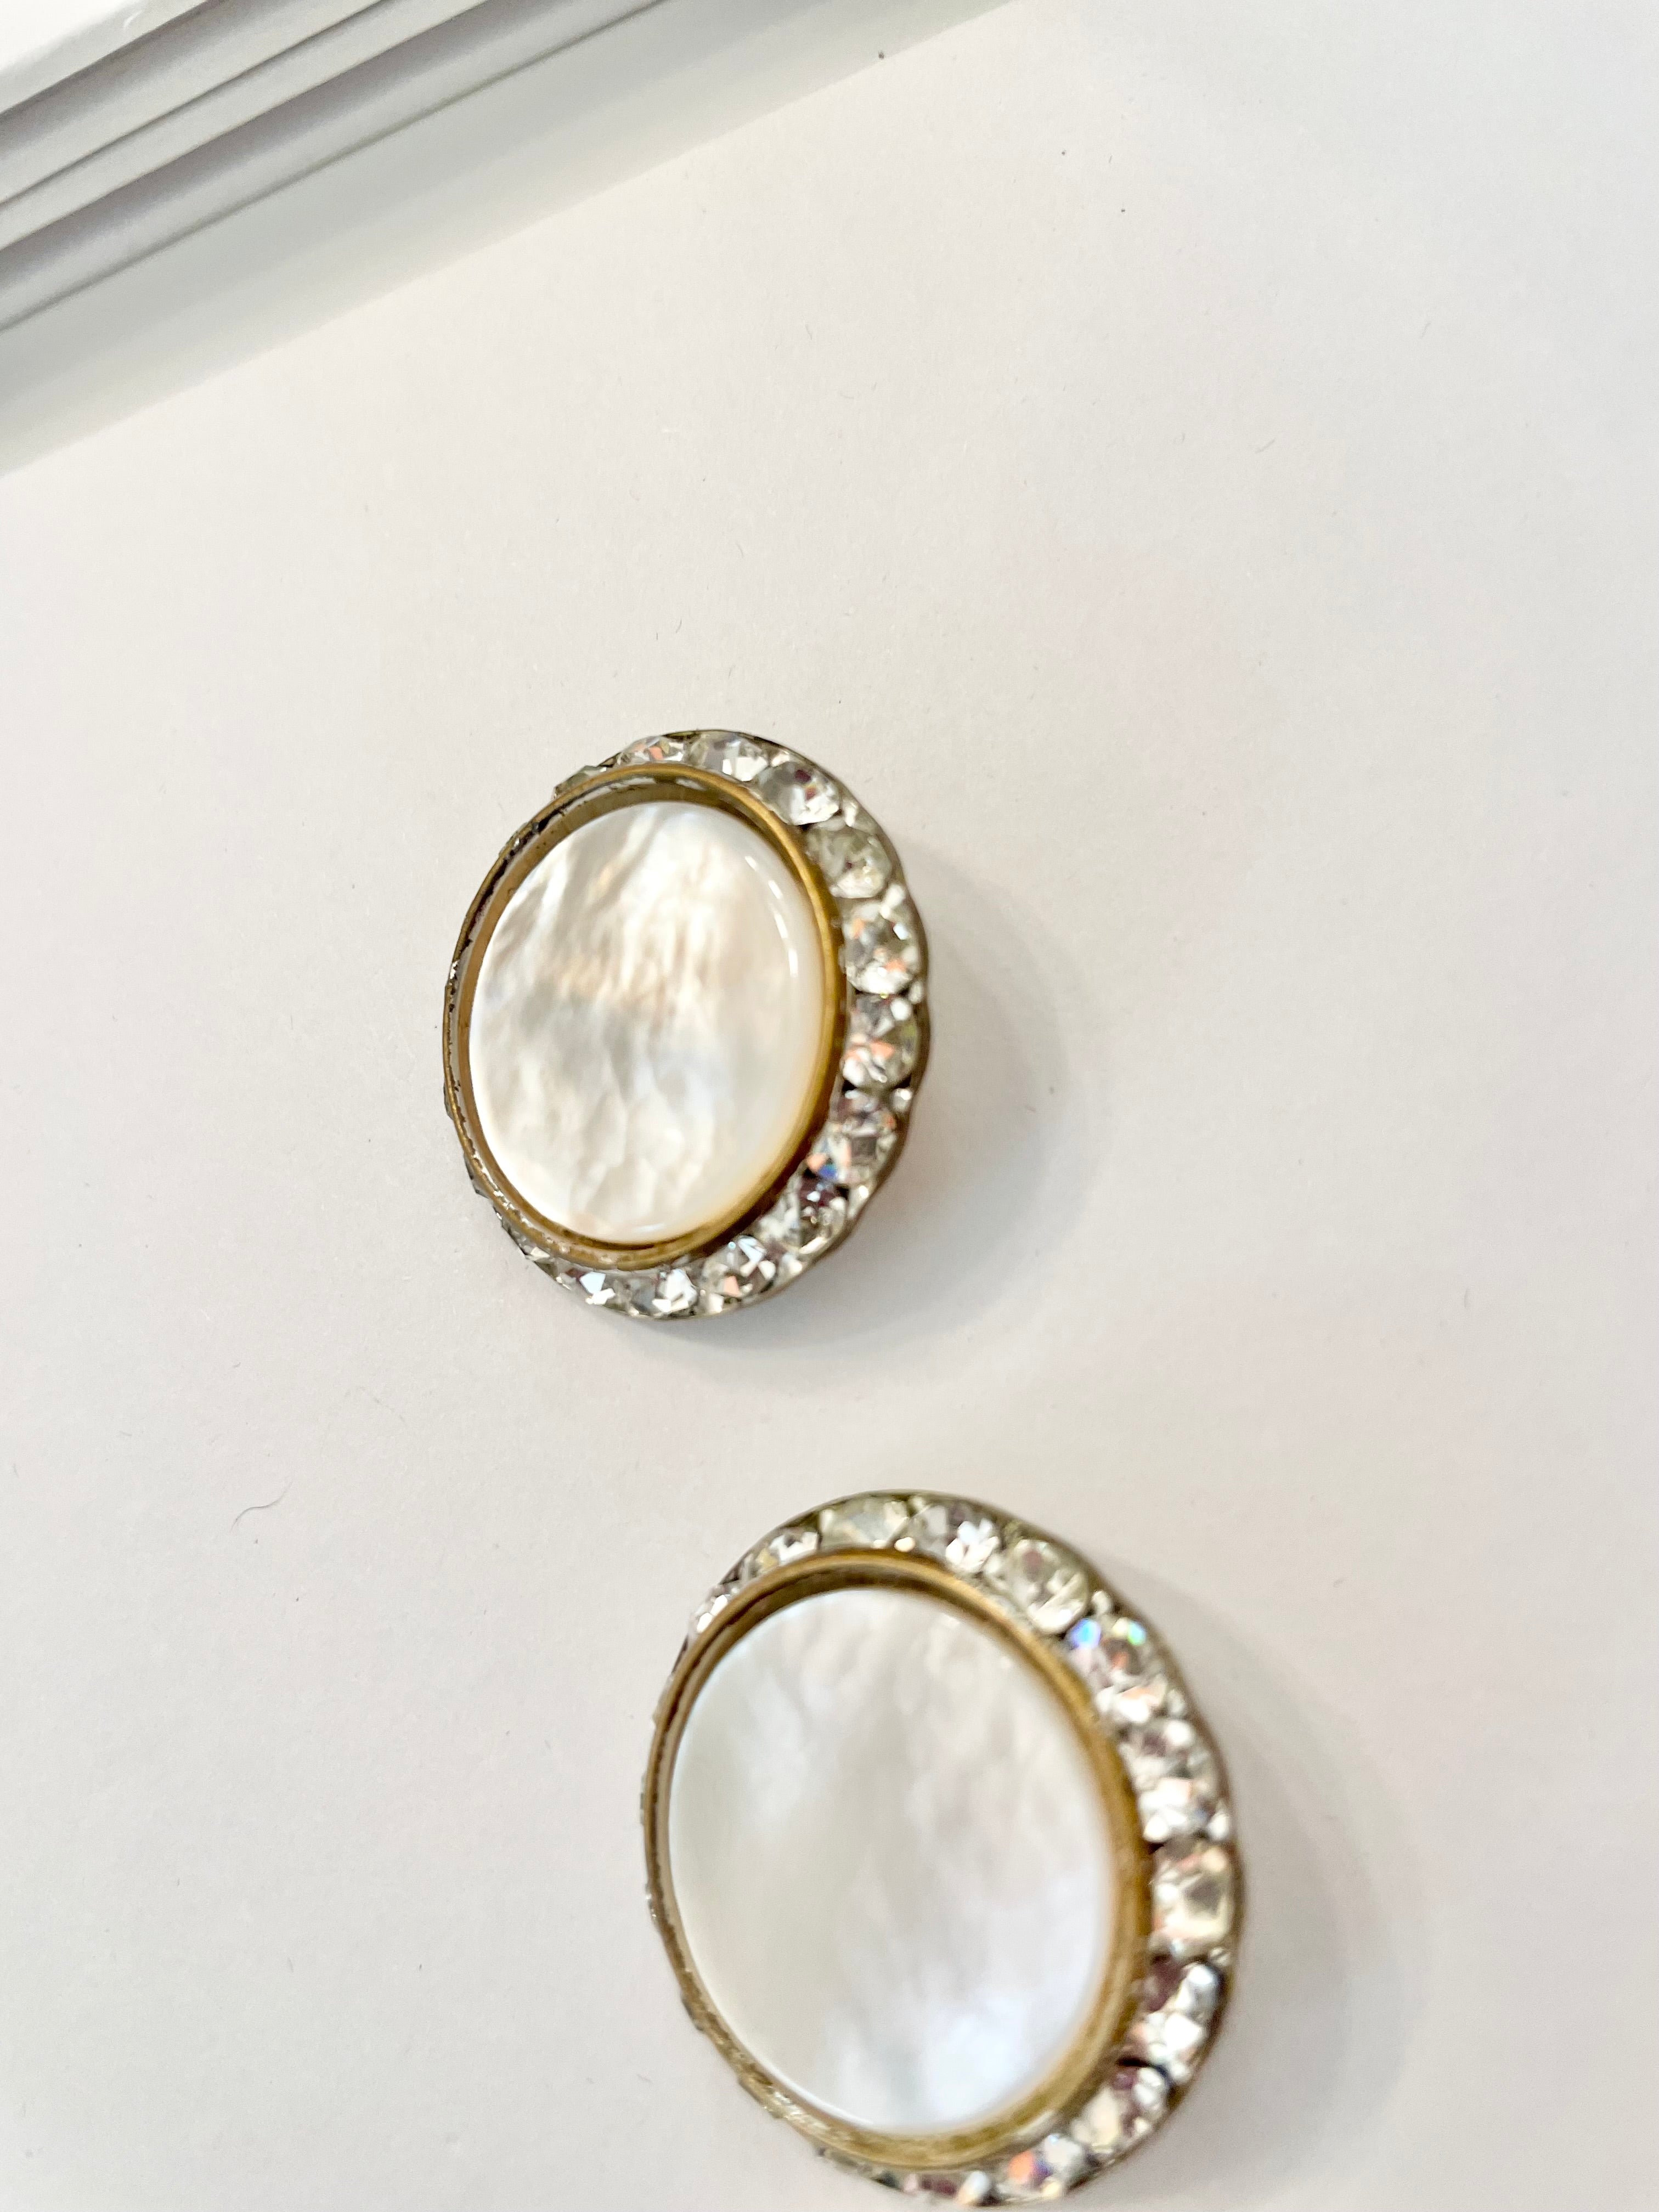 1960's Lisner super classy mother of pearl button earrings... so elegant.